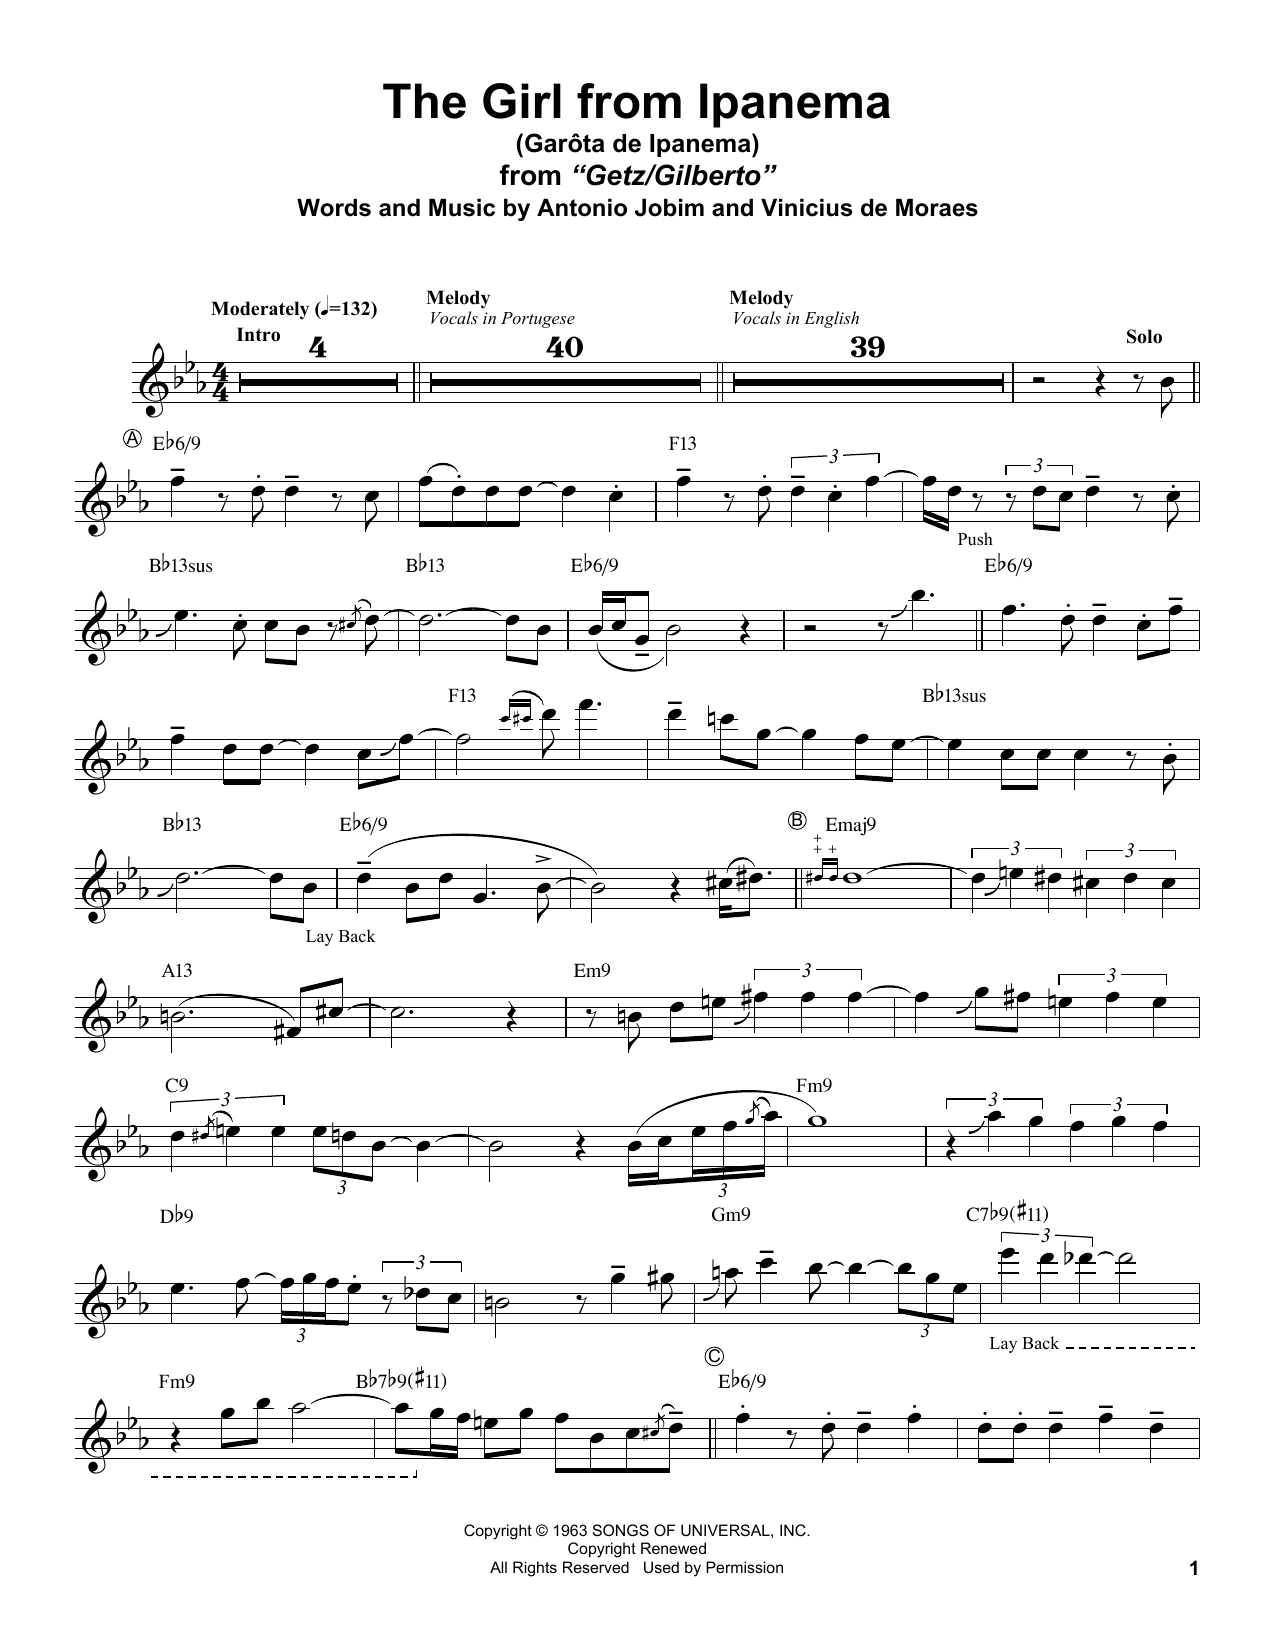 Stan Getz Garota De Ipanema Sheet Music Notes & Chords for Tenor Sax Transcription - Download or Print PDF